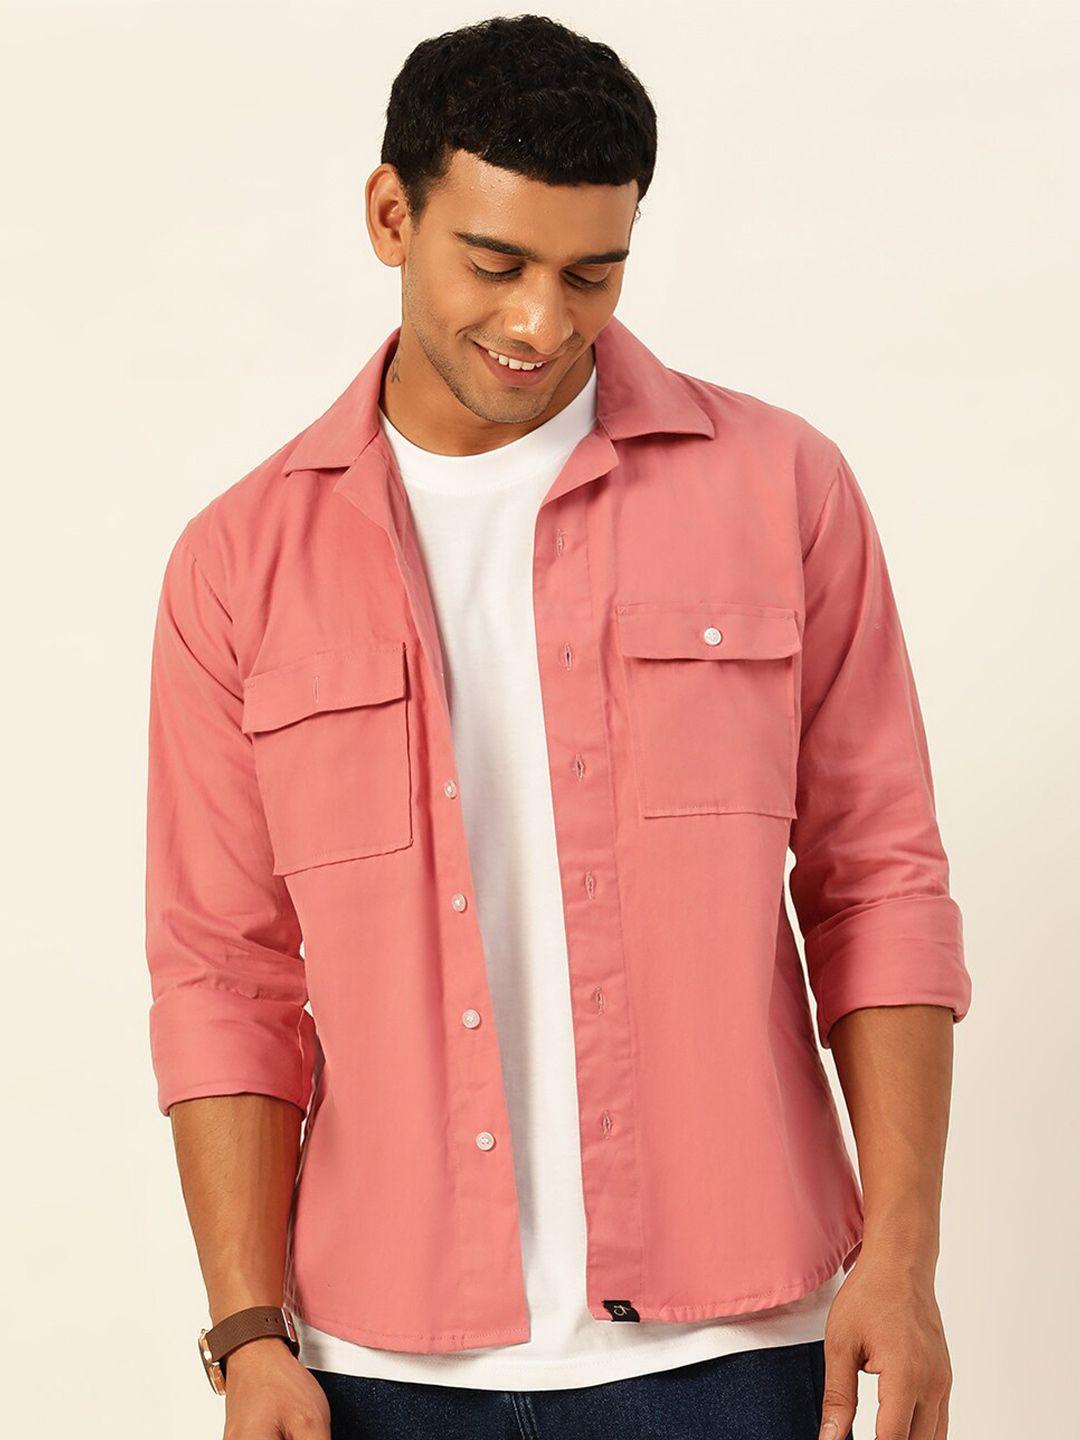 javinishka unisex india slim regular fit overshirt spread collar pure cotton casual shirt